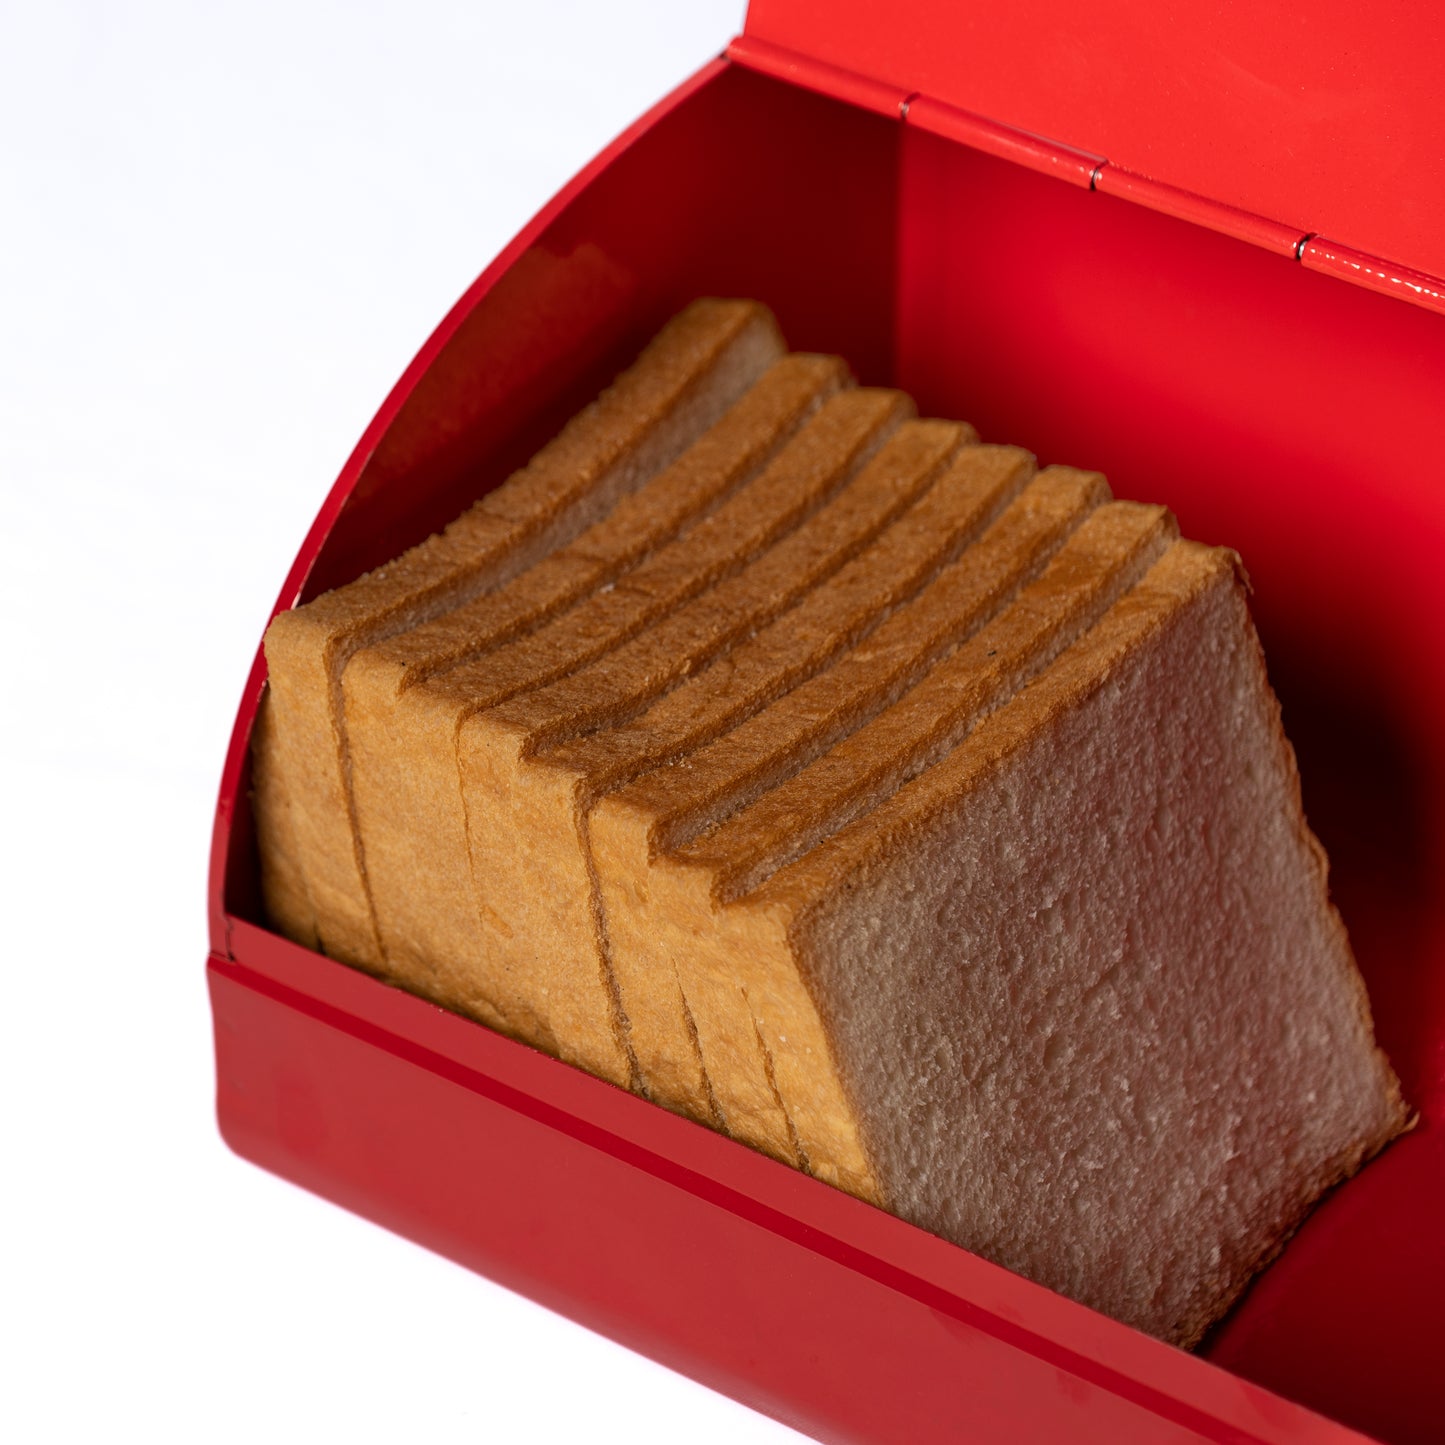 Polka Dot Bread Box